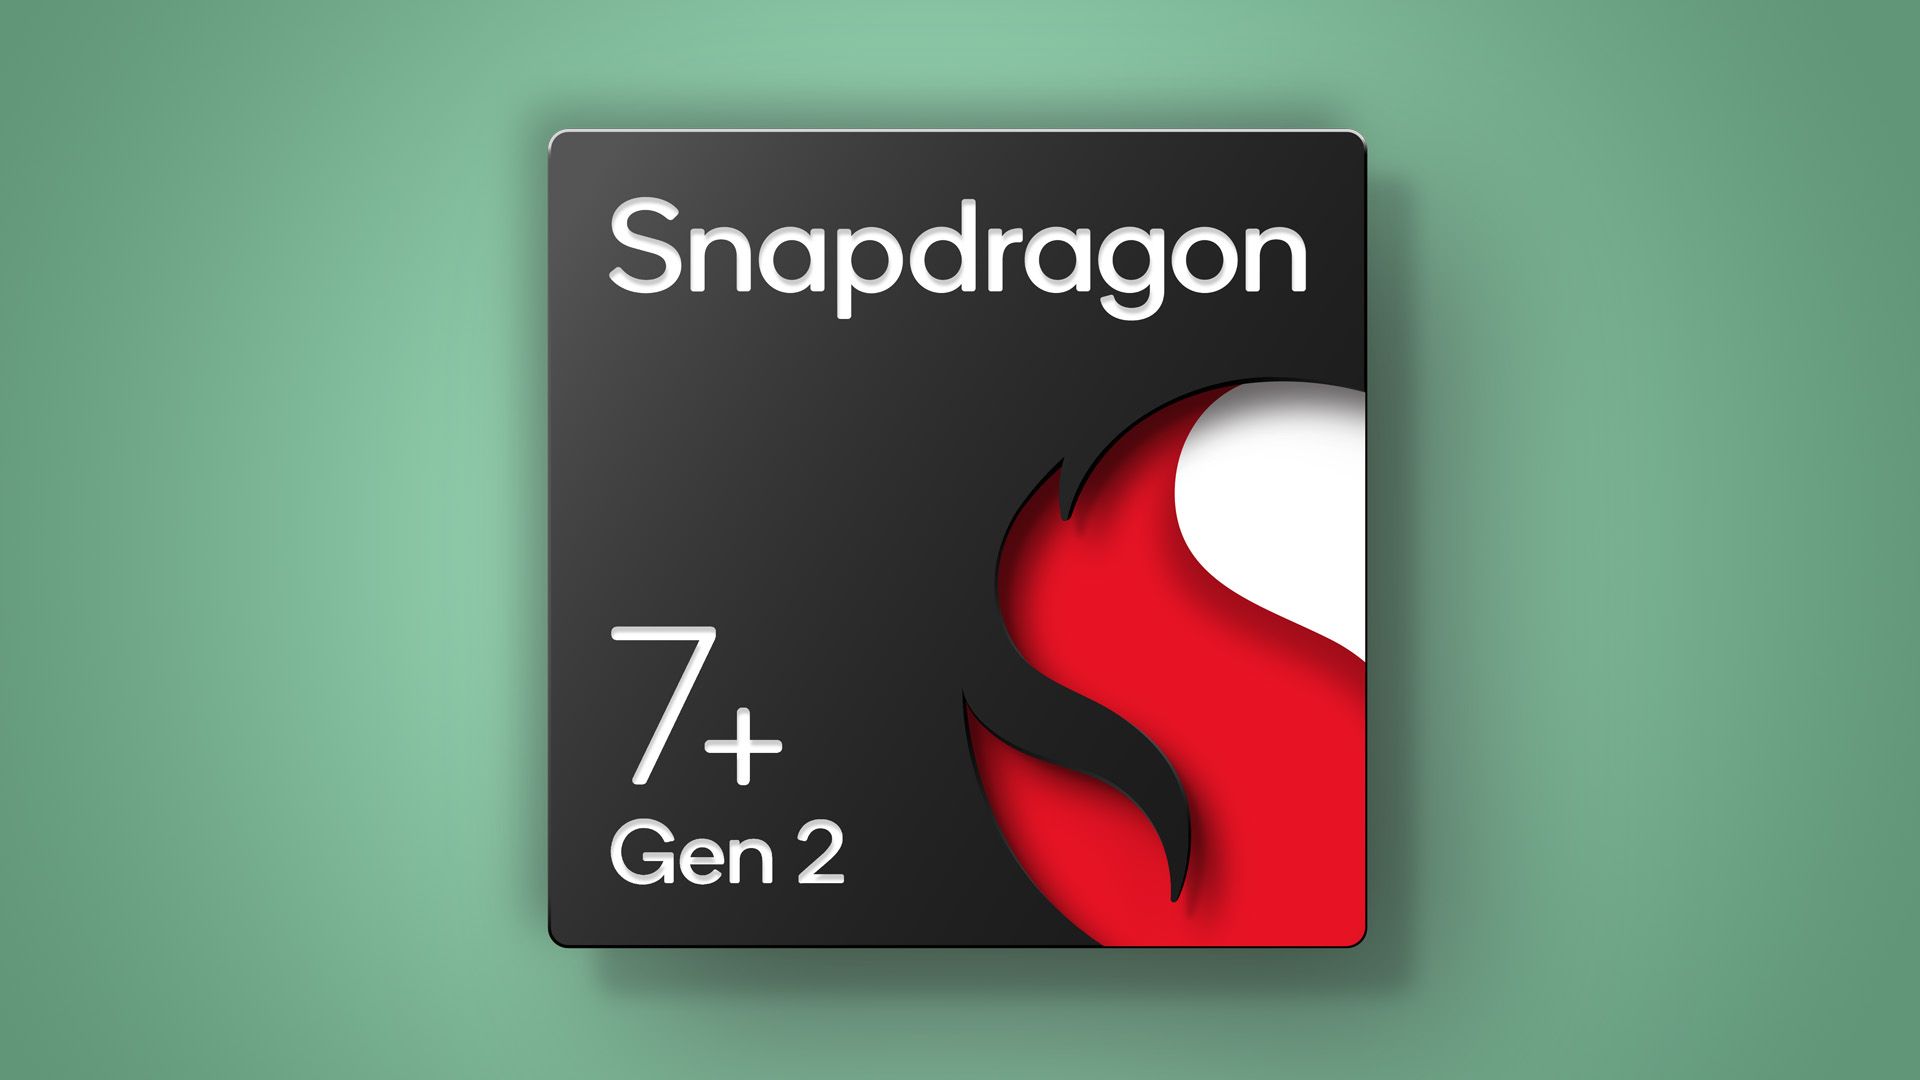 Qualcomm Snapdragon 7+ Gen 2 chip